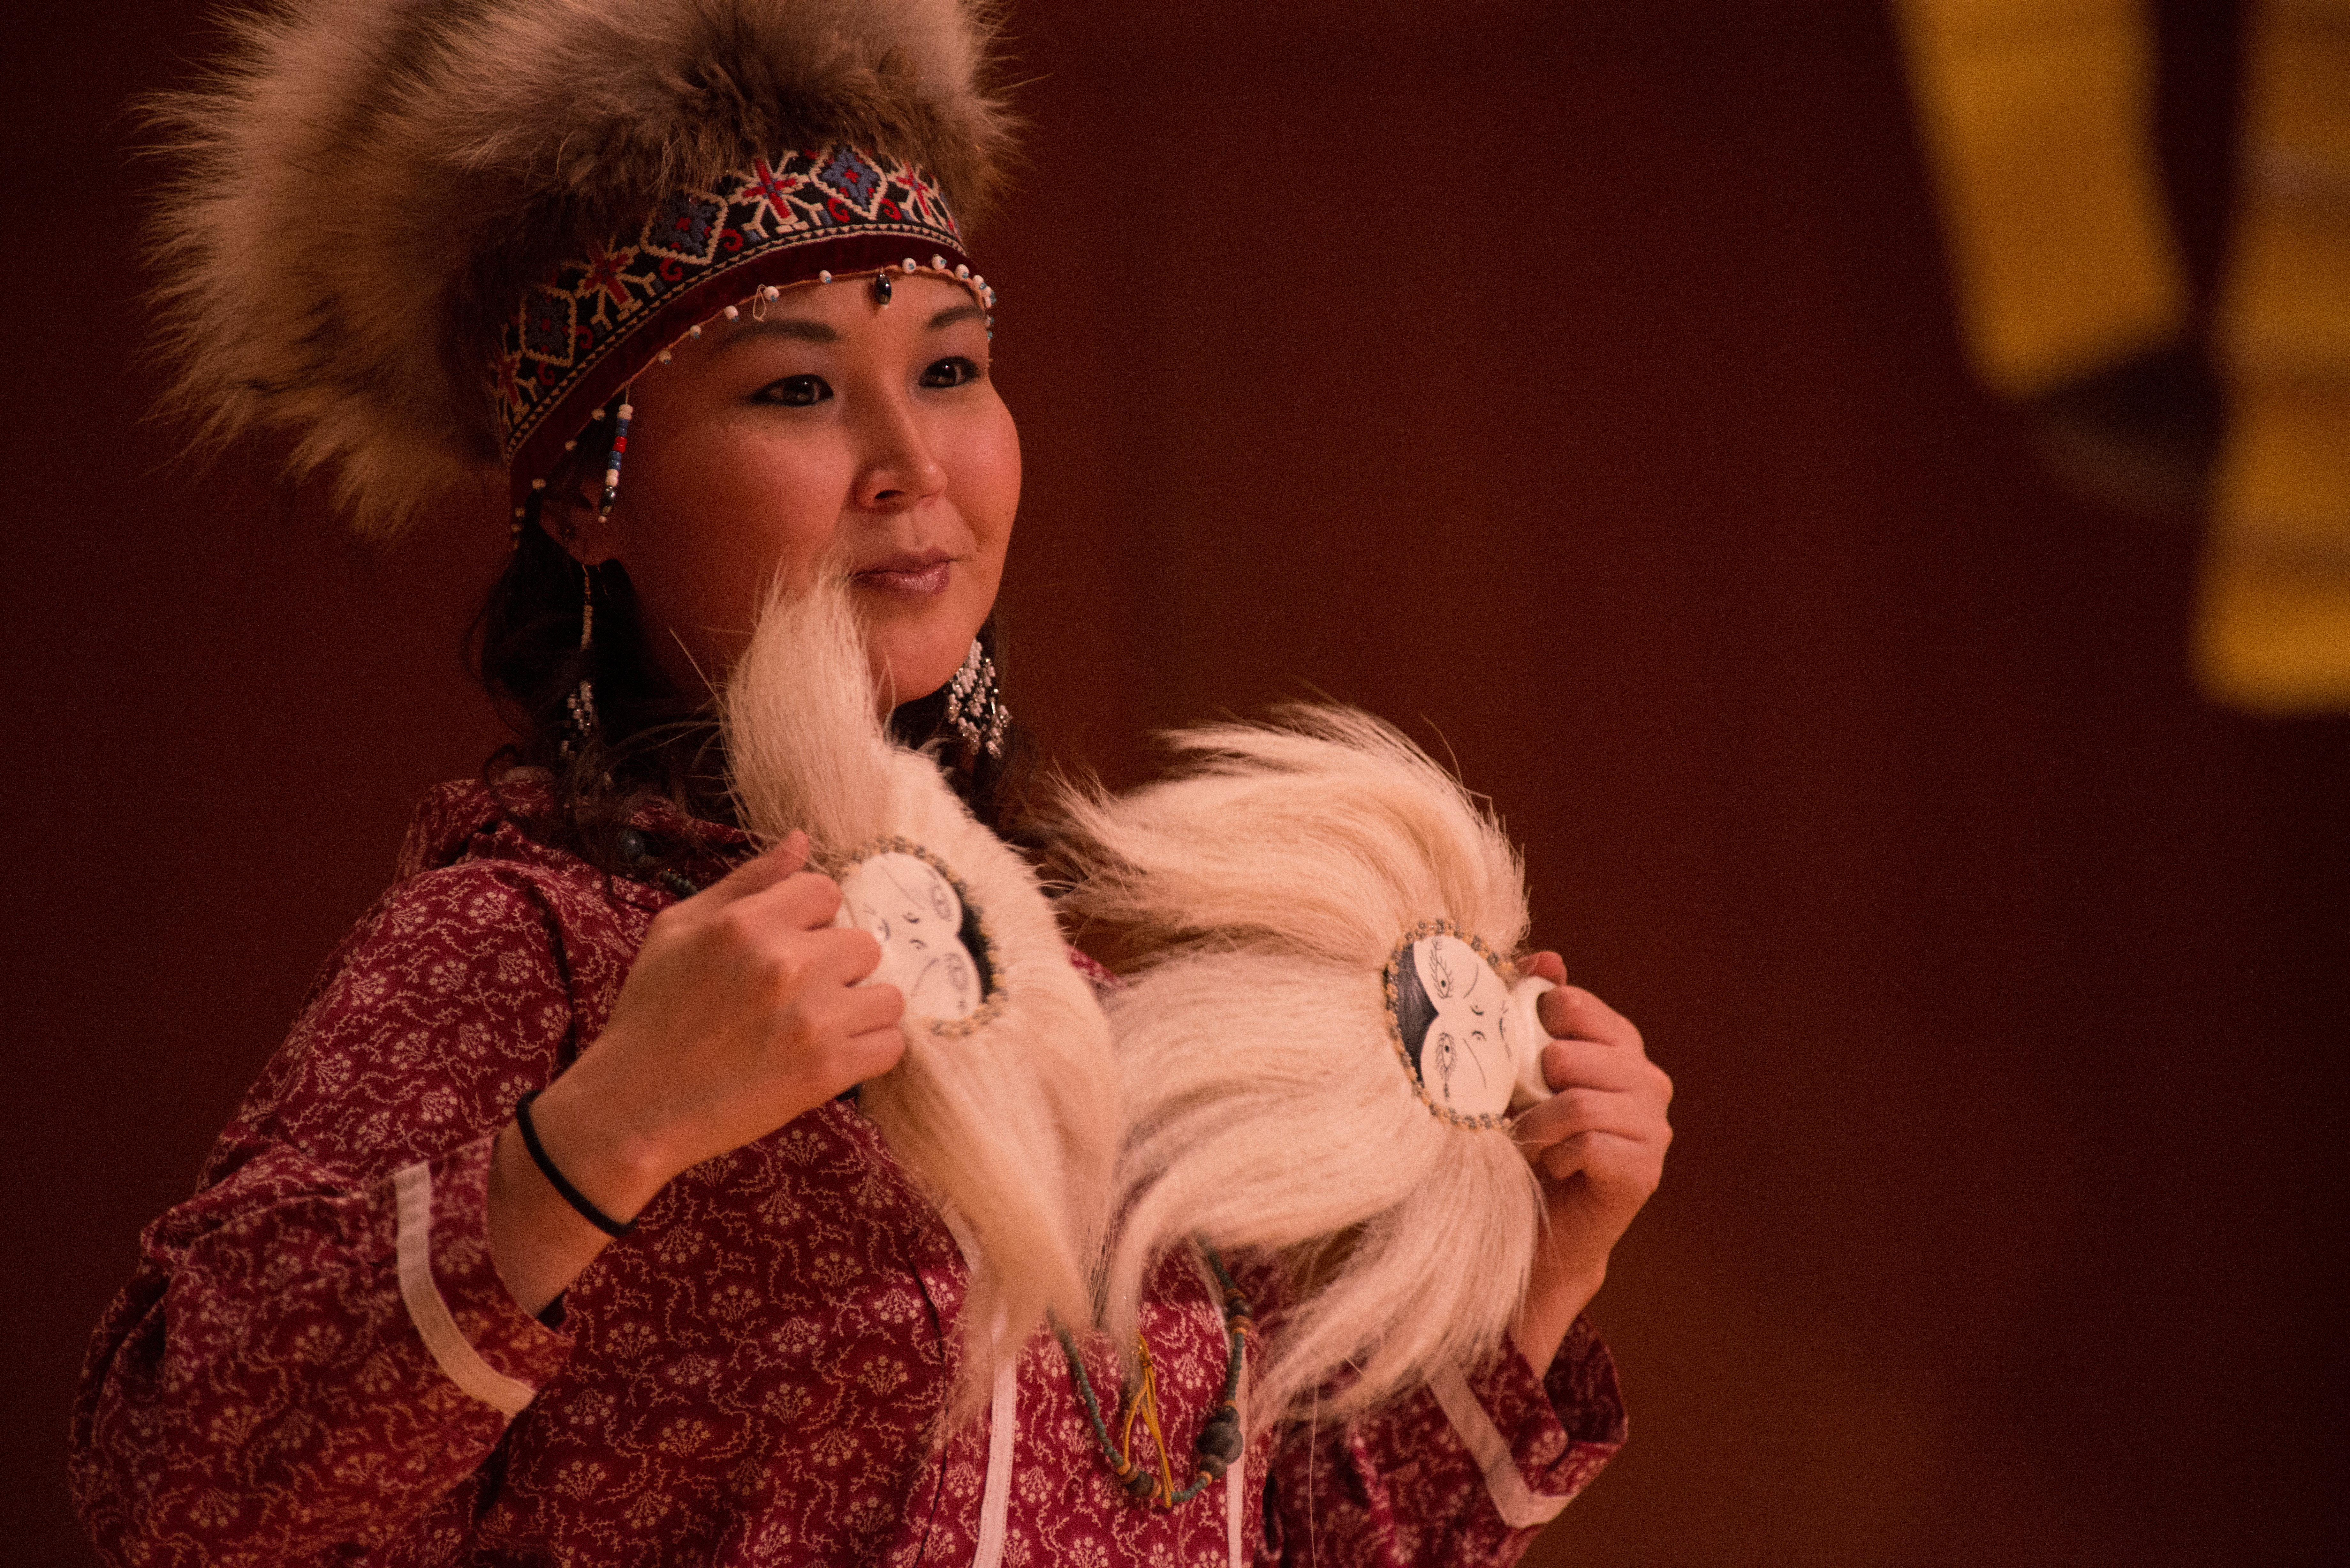 Alaska Native woman dancing performance